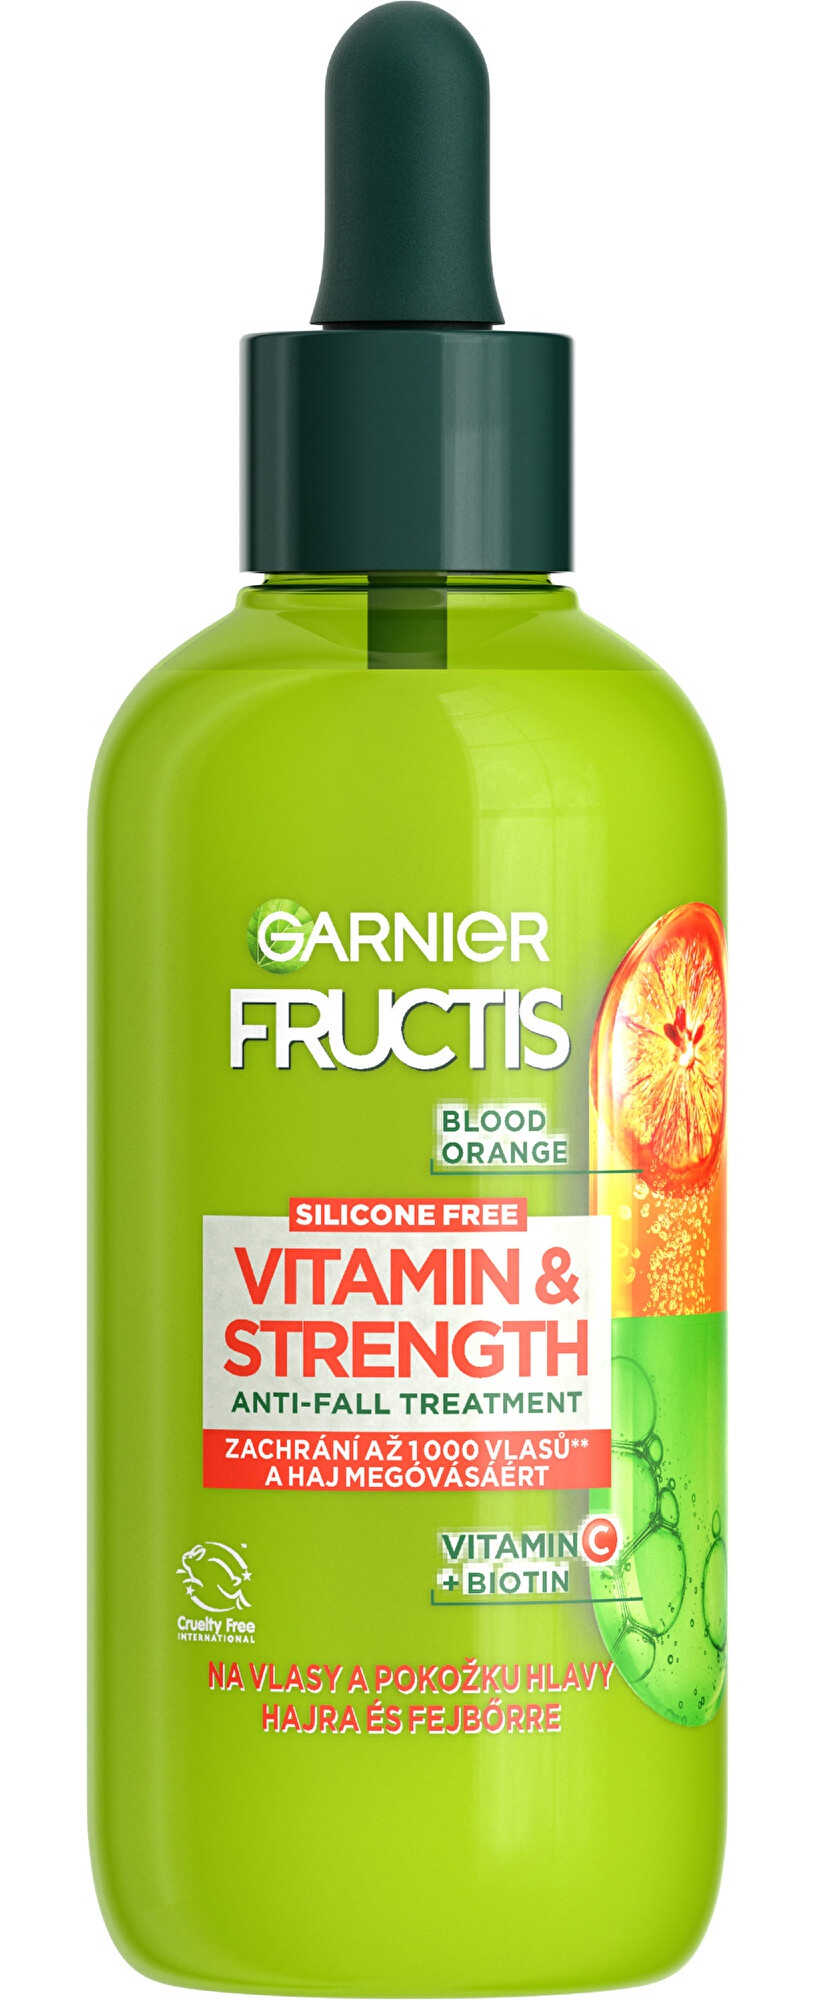 Garnier Fructis Vitamin & Strength Anti-Fall Treatment